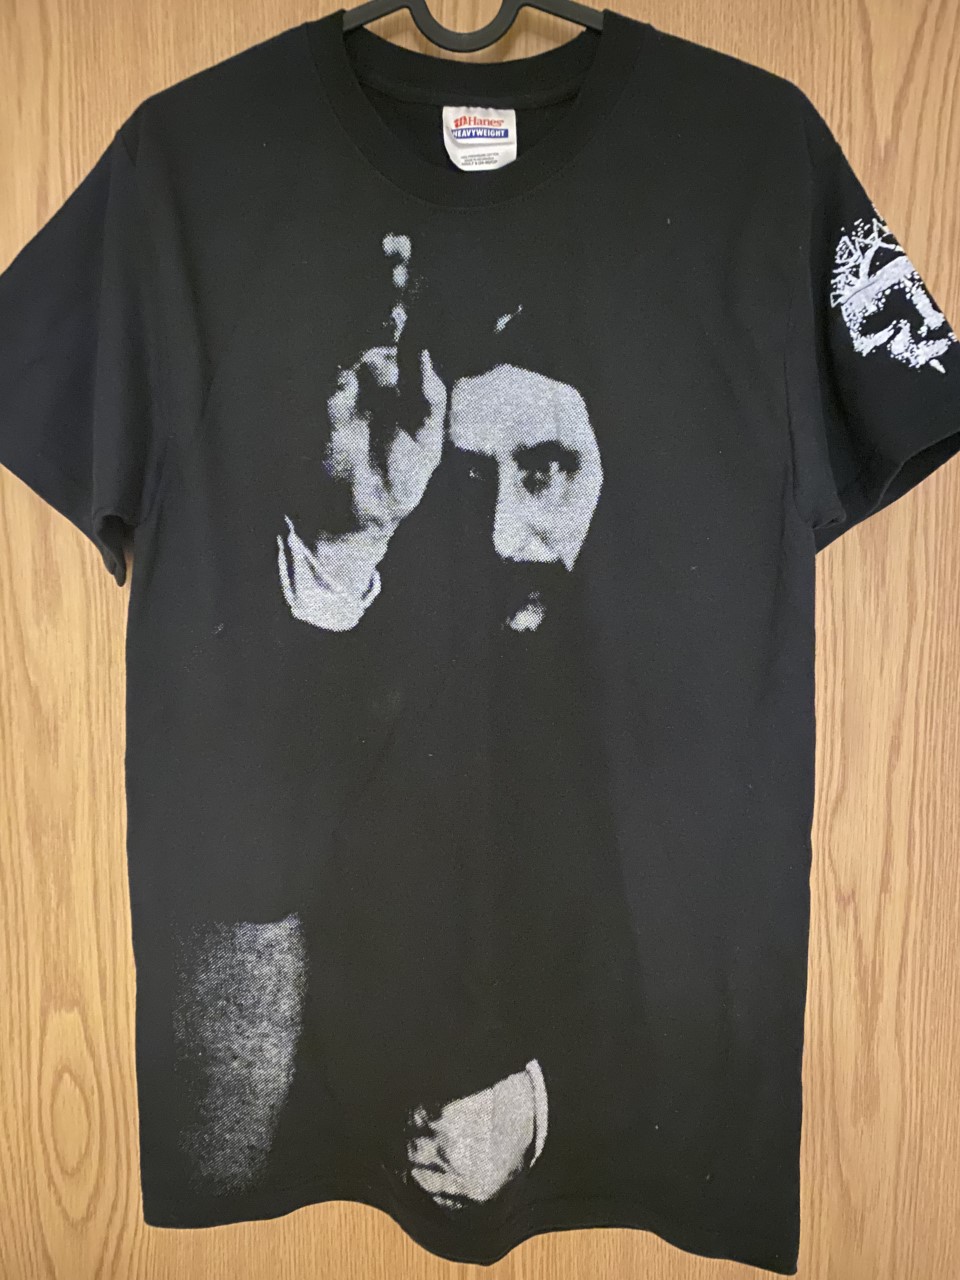 Integrity - Rasputin Hated of the World - Shirt